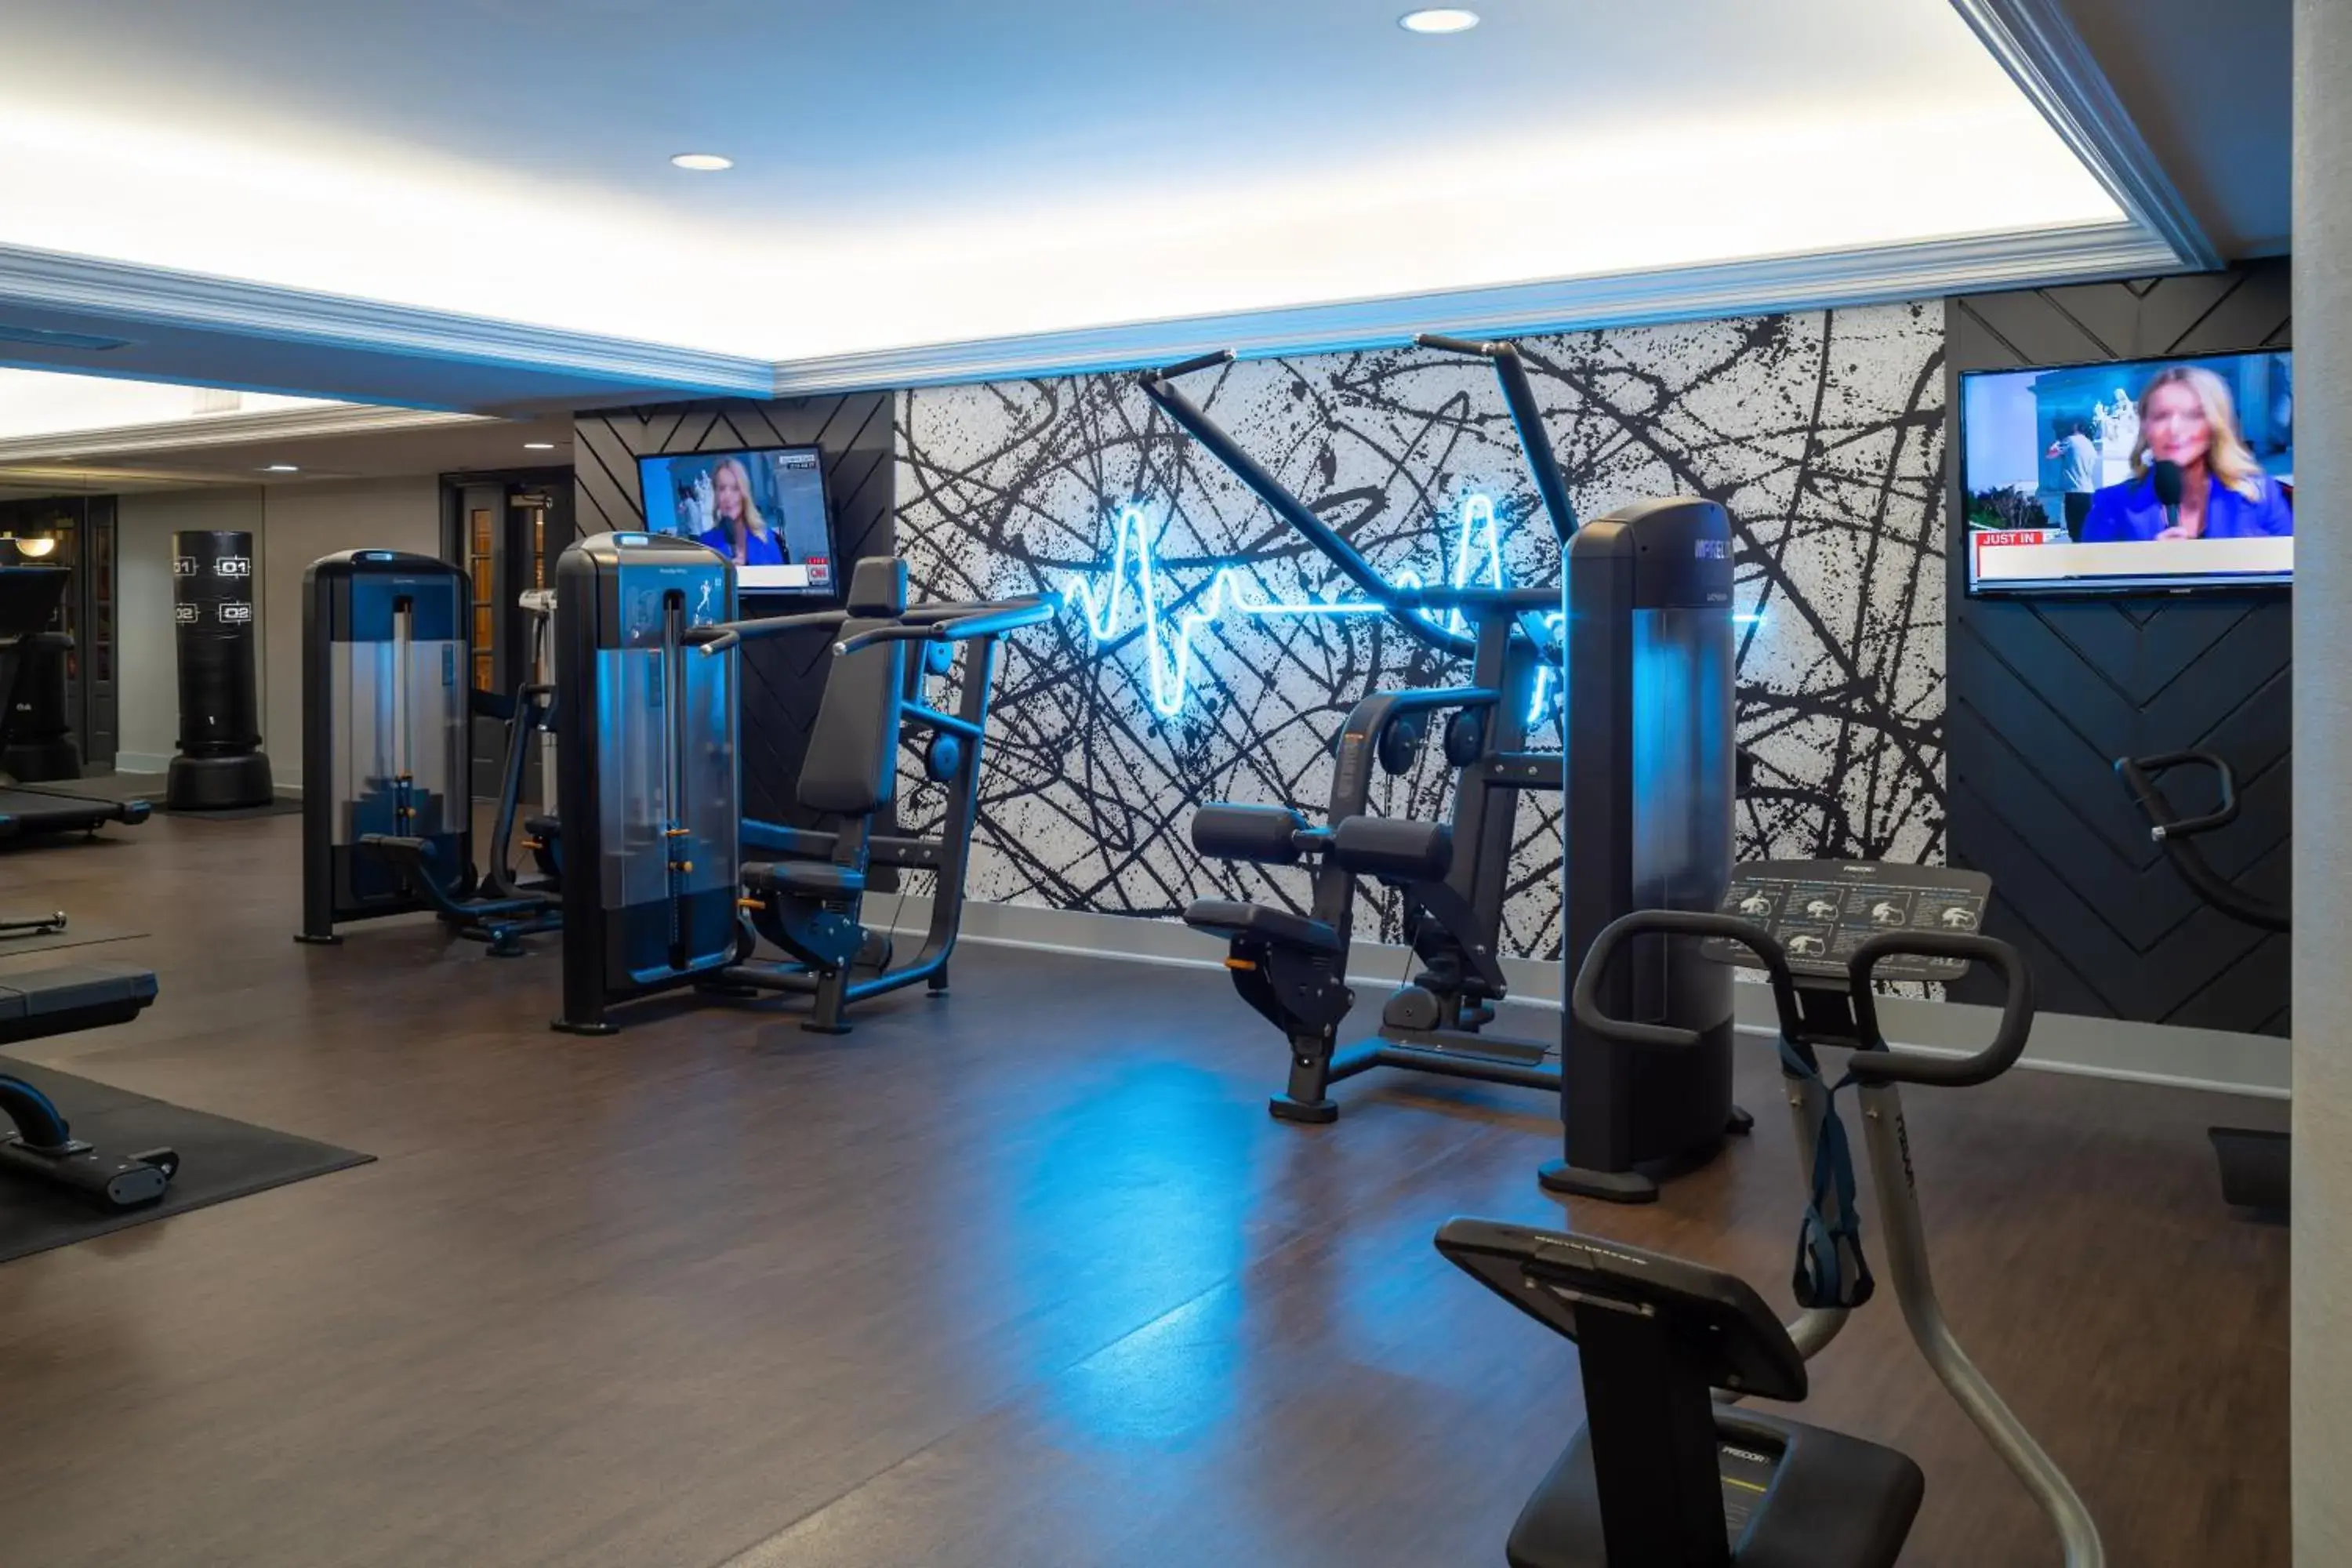 Fitness centre/facilities, Fitness Center/Facilities in The Stephen F Austin Royal Sonesta Hotel